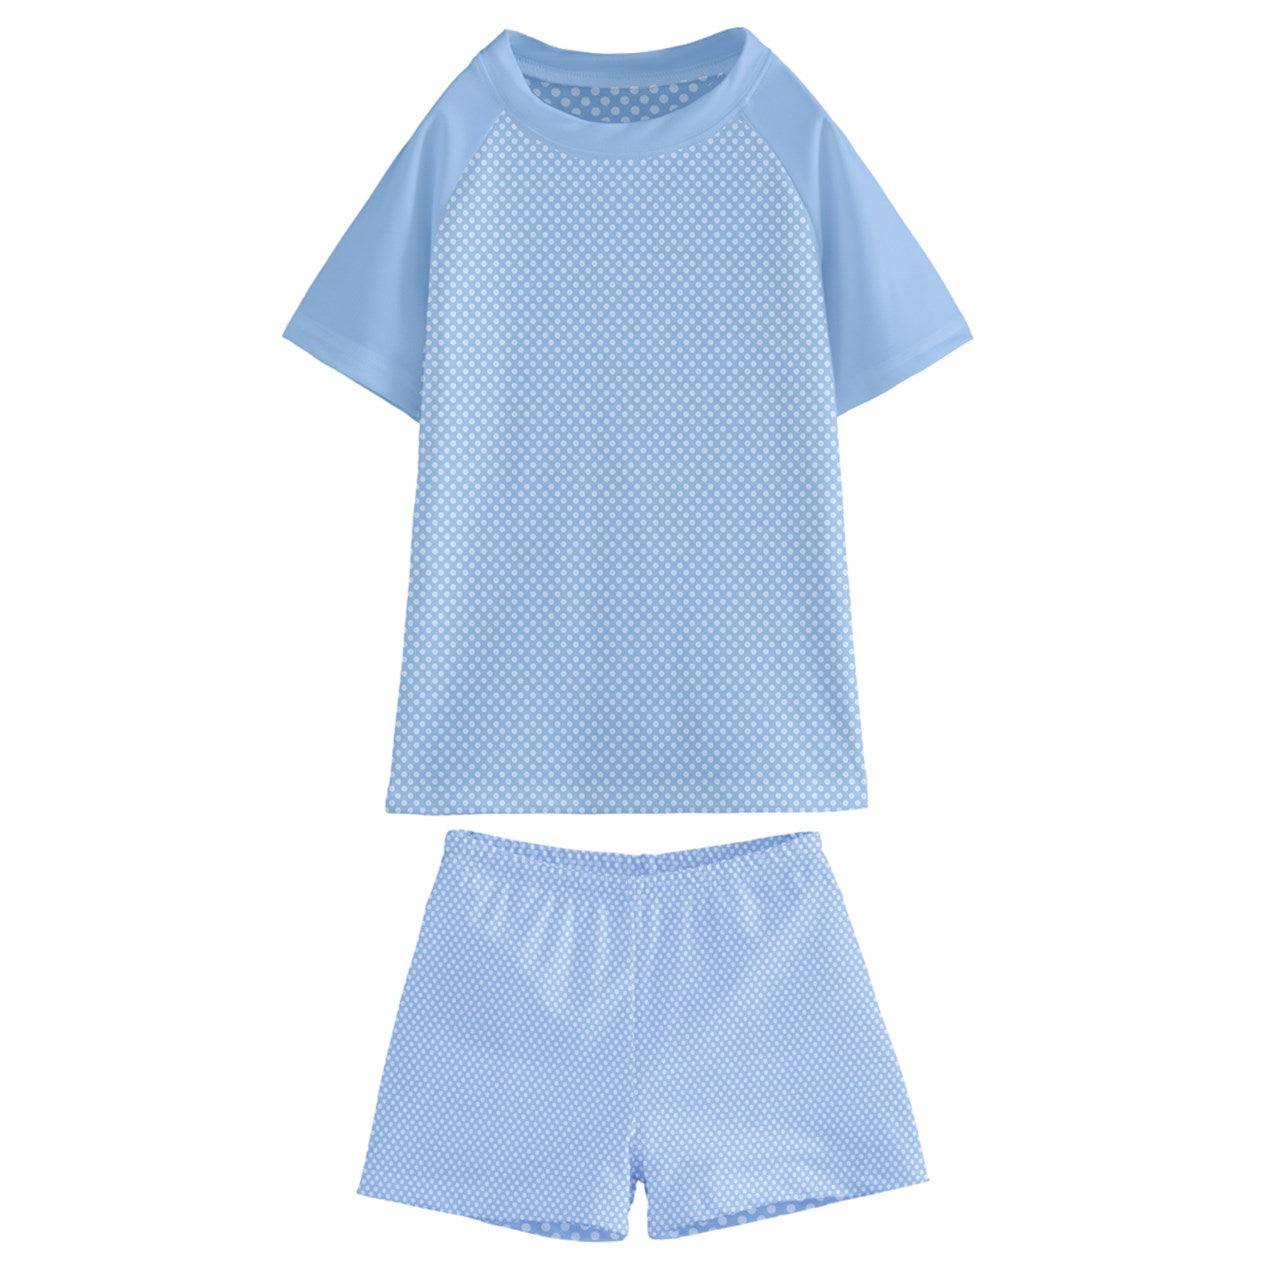 Vampire Art Kids' Swim T-Shirt and Shorts Set - Pale Blue Retro Polka Dot